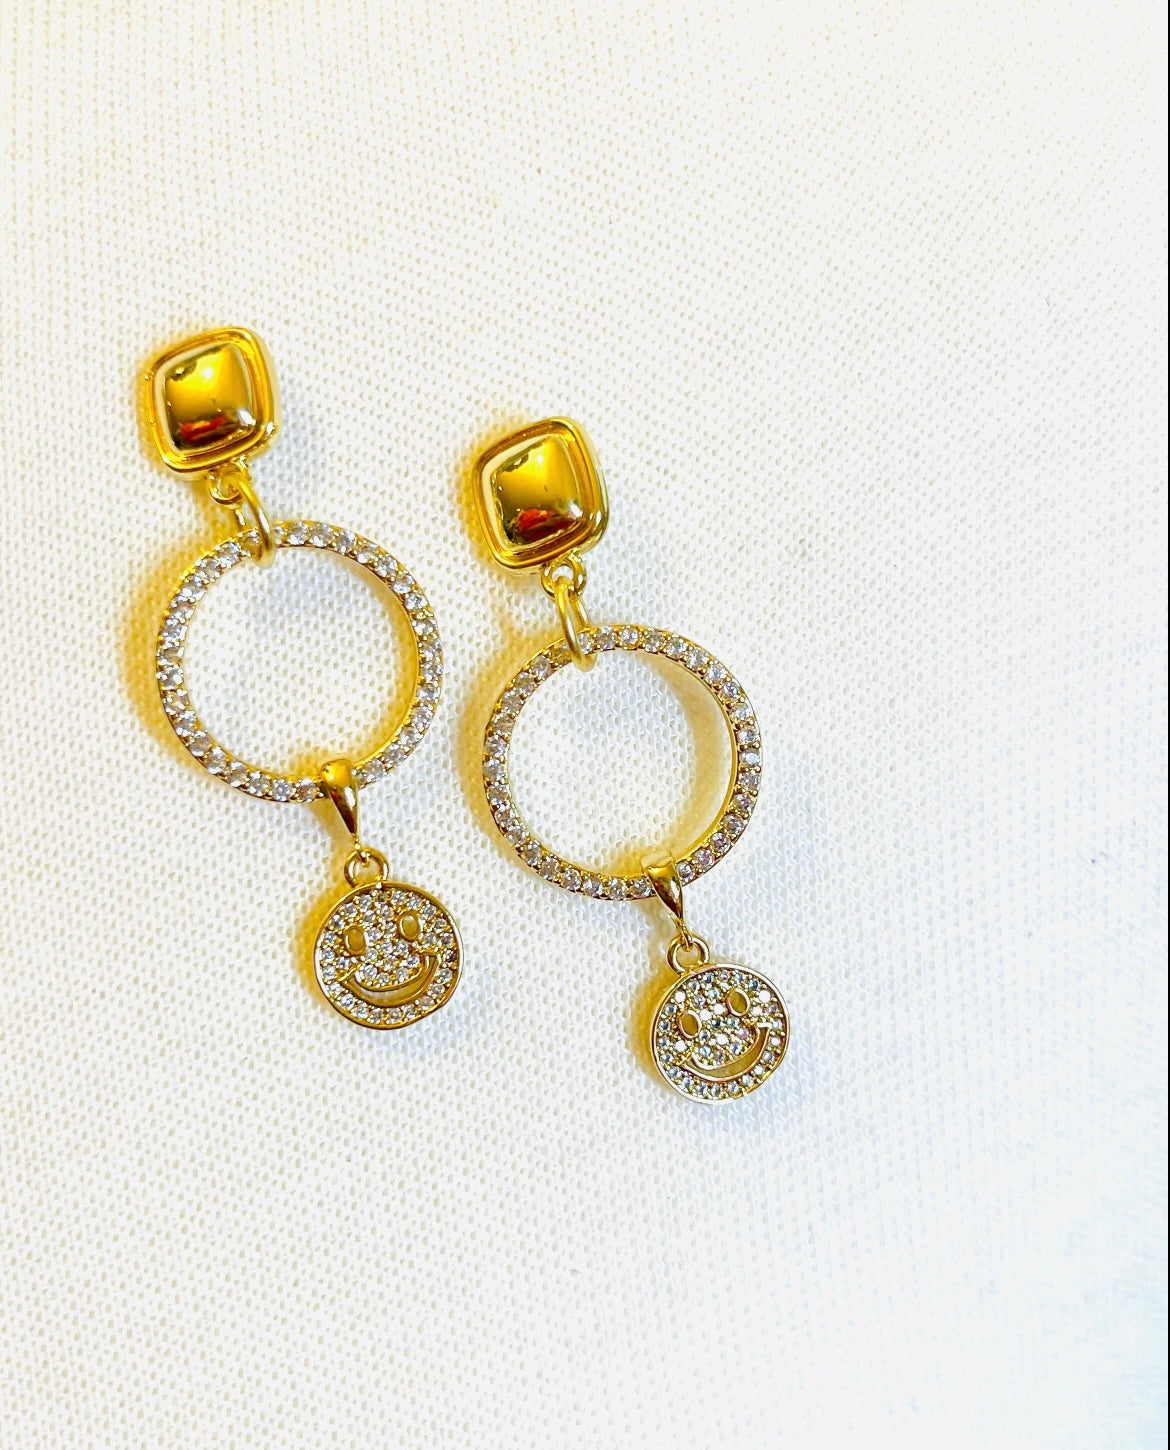 Pave happy earrings